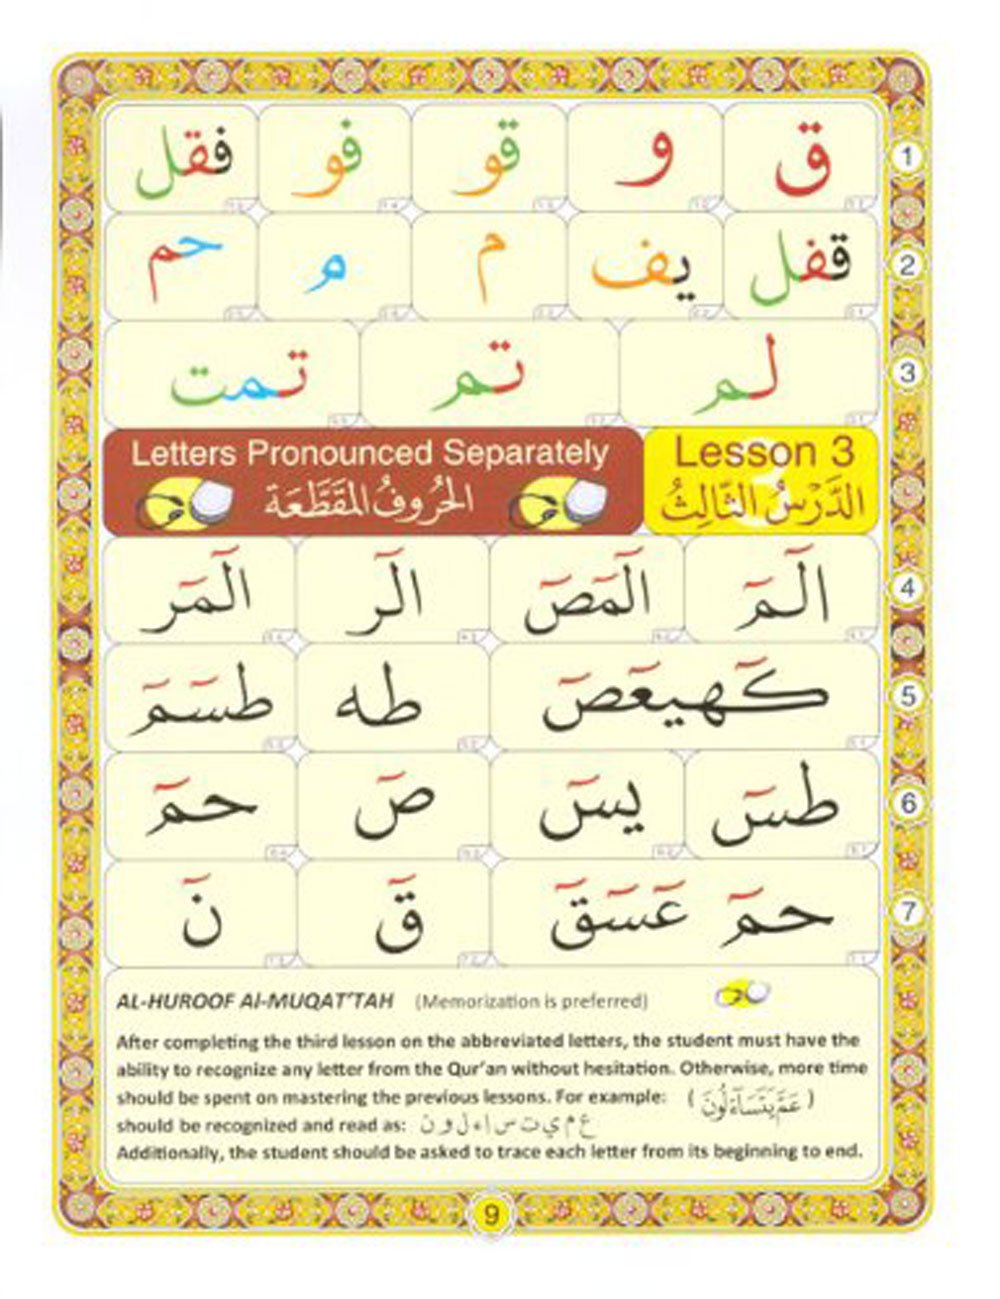 Noorani Qa’idah Master Reading the Qur'an (Arabic & English) - Small Size القواعد النورانية